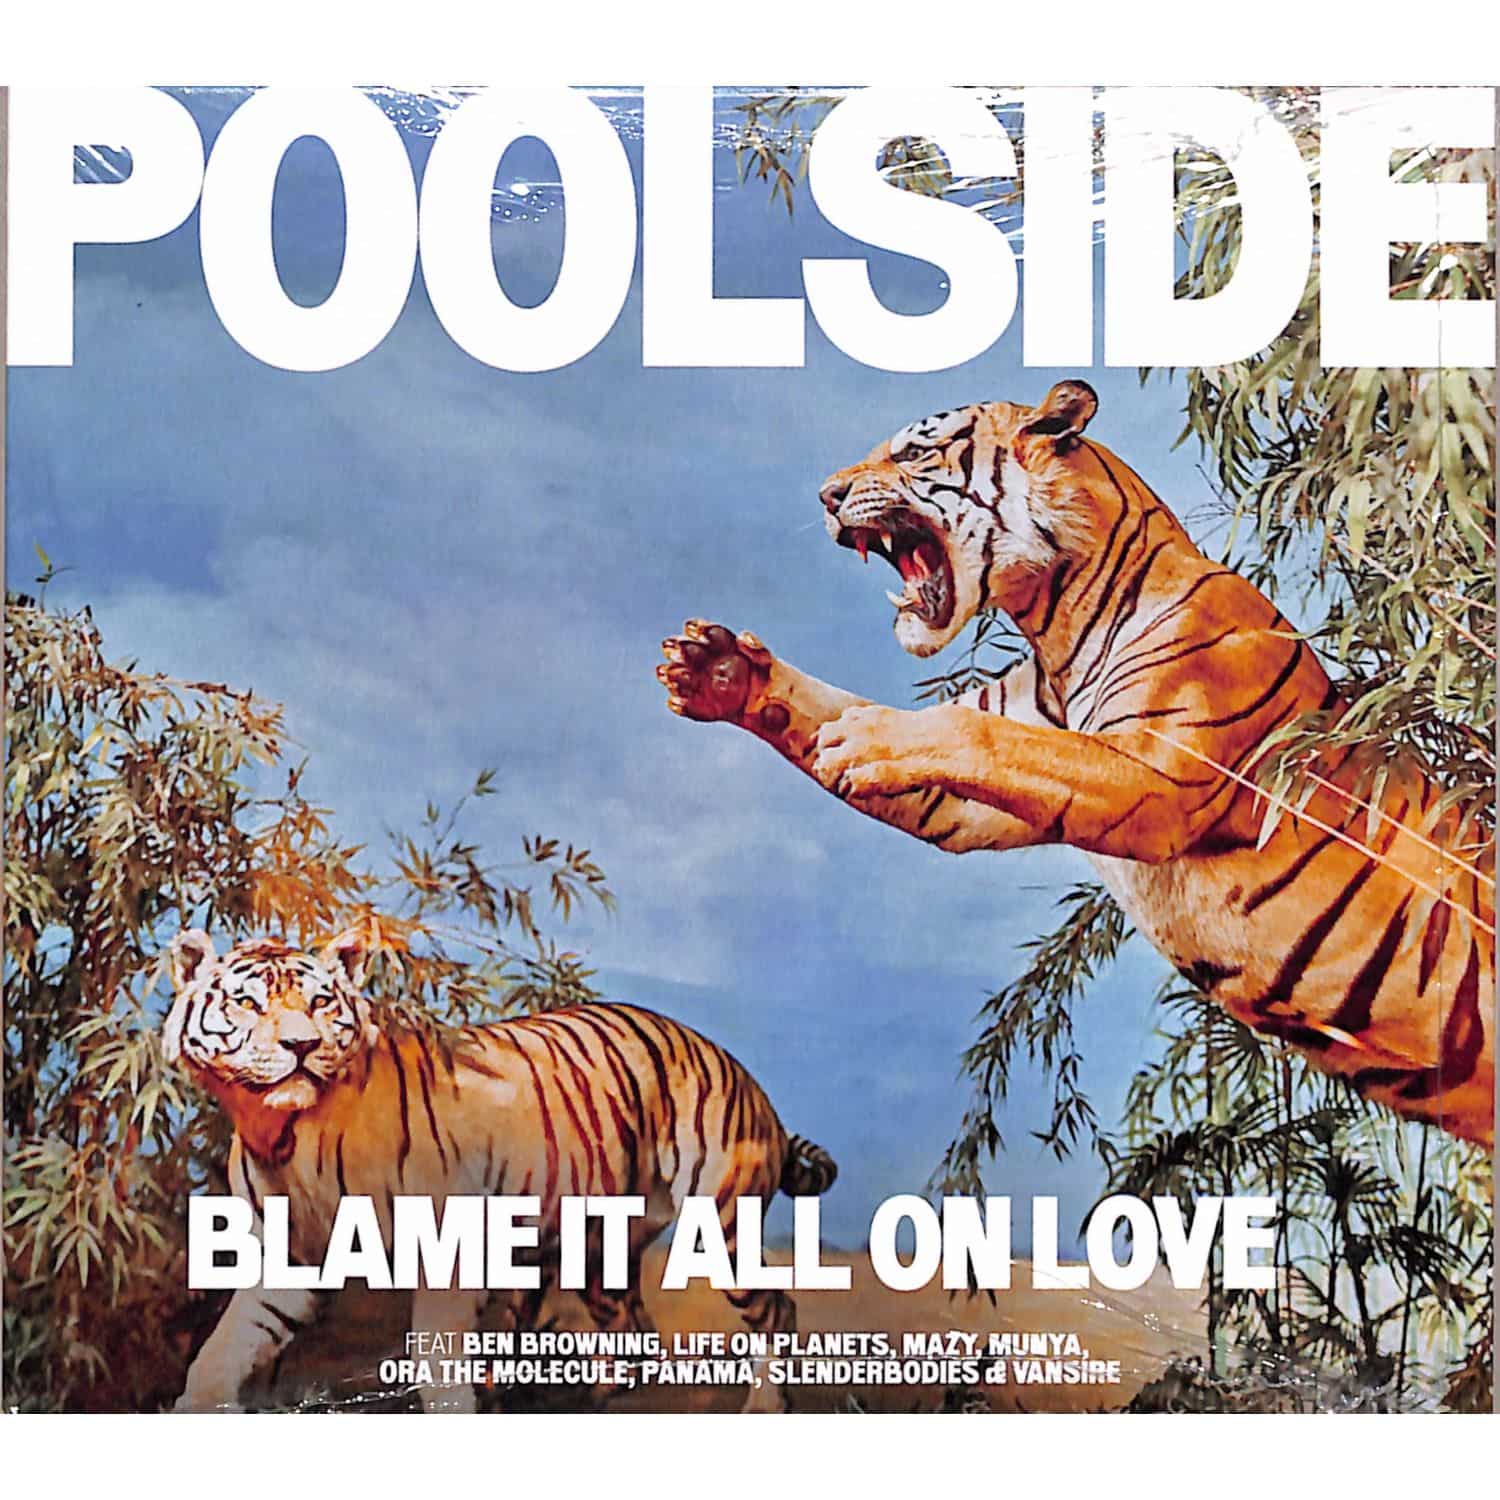 Poolside - BLAME IT ALL ON LOVE 